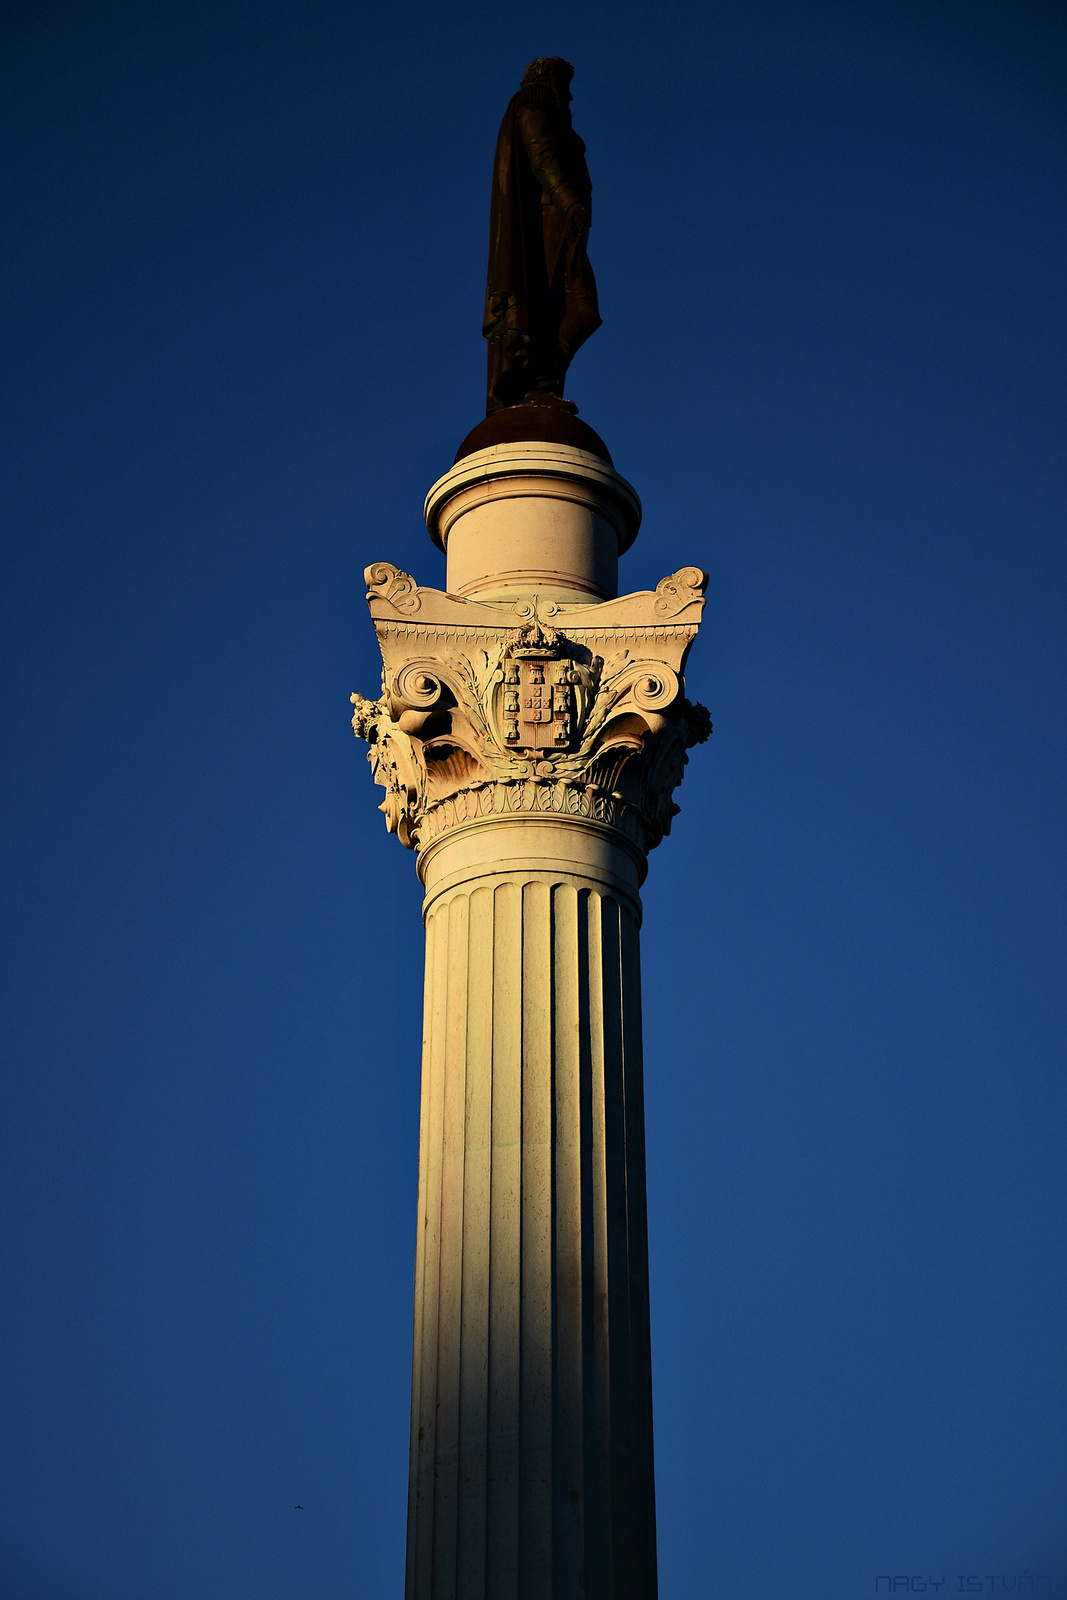 Lisbon - Statue of Dom Pedro IV